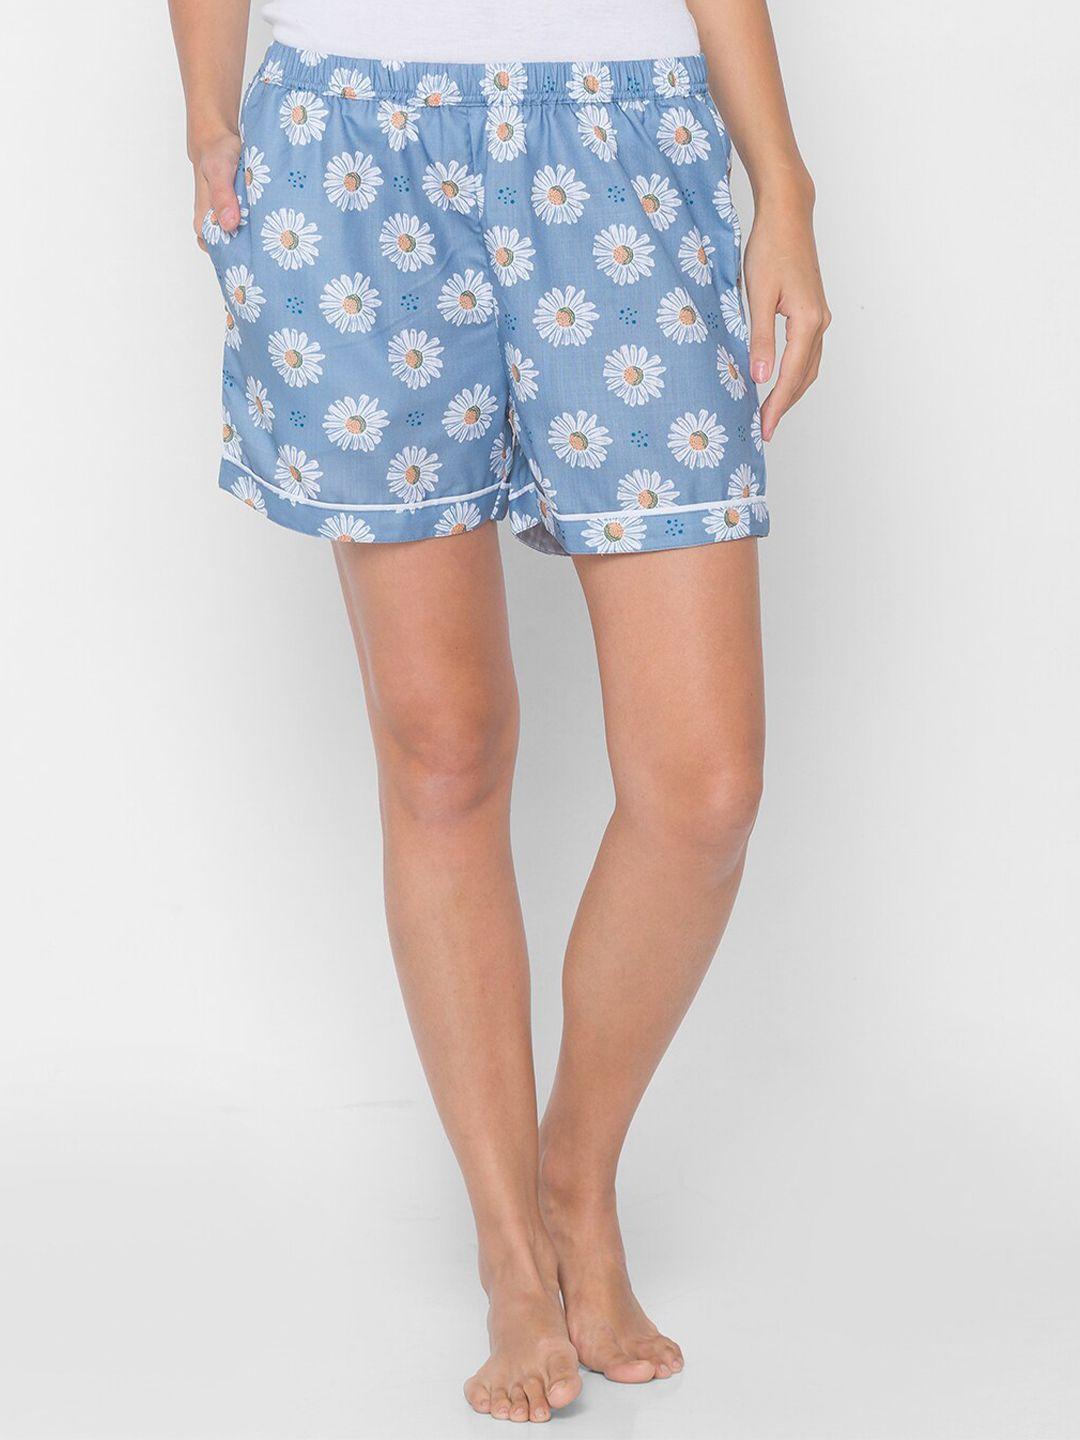 fashionrack-women-turquoise-blue-&-white-printed-cotton-lounge-shorts